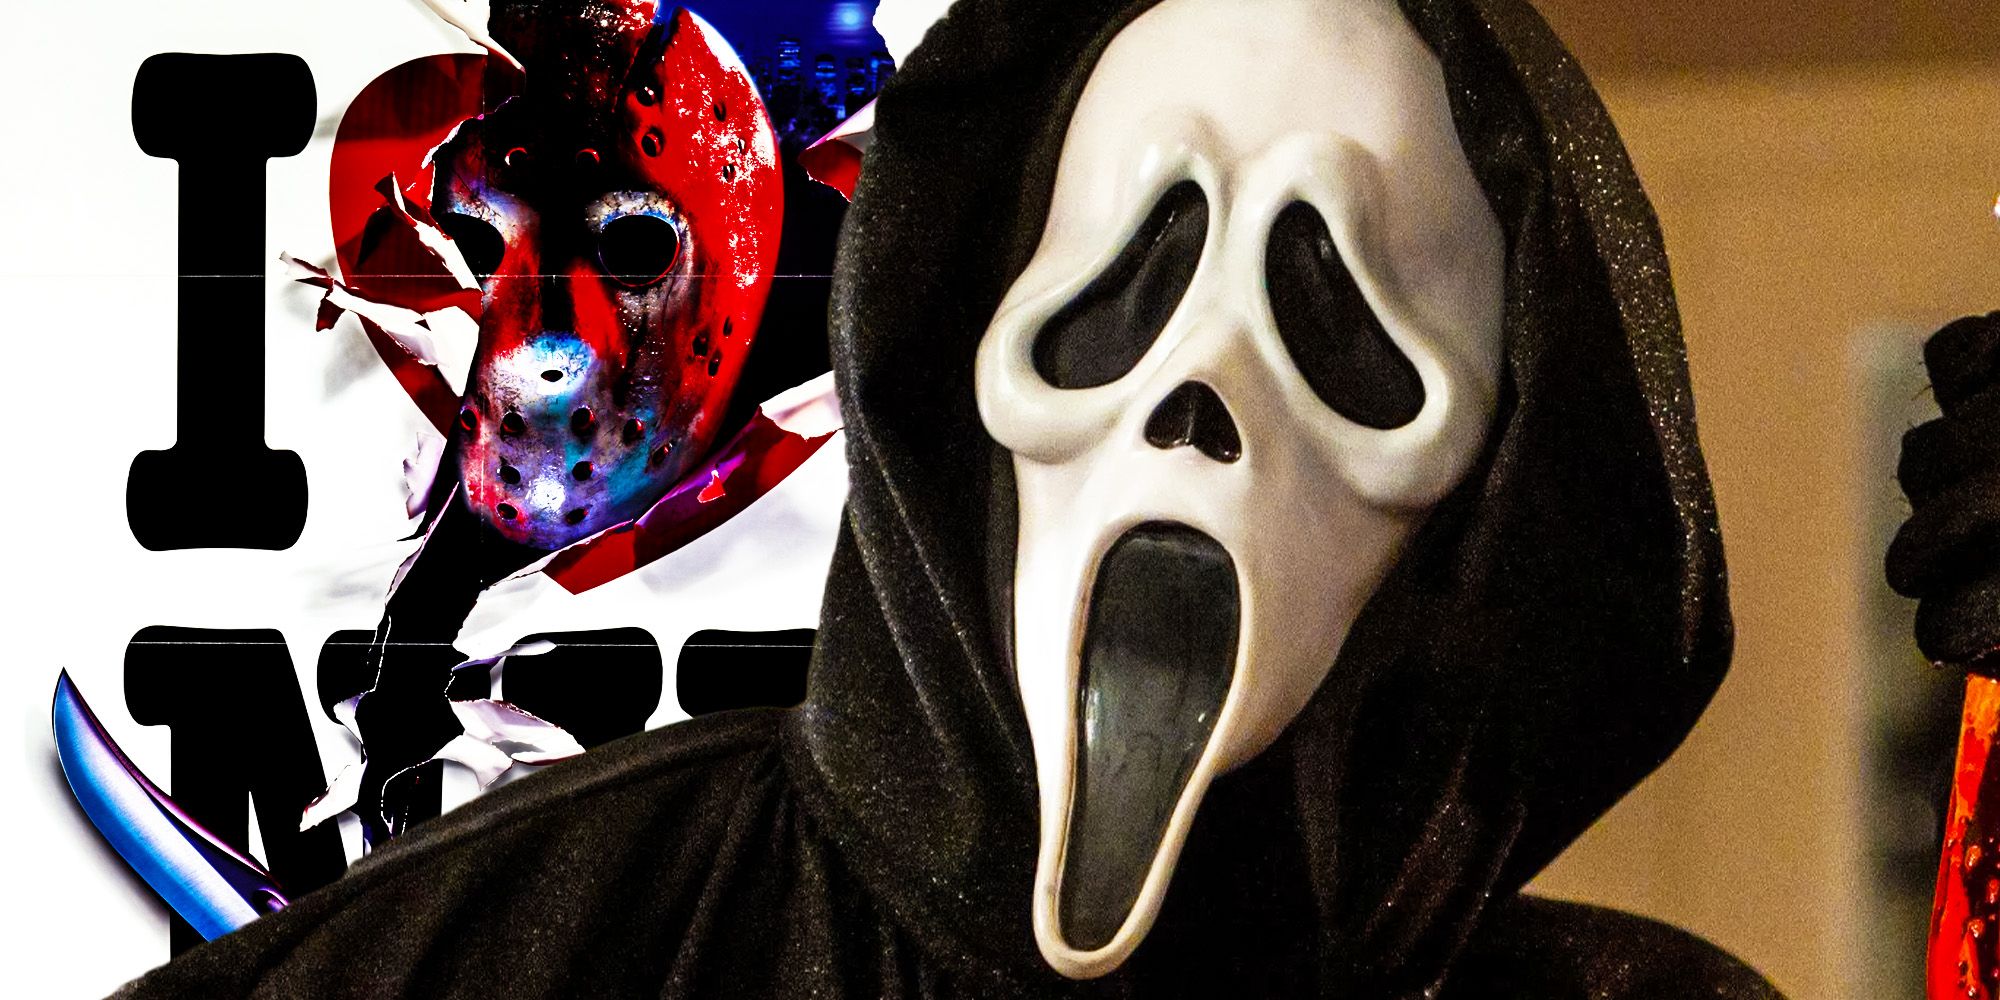 You'll Be Screaming for Scream 6 – Manhasset Media